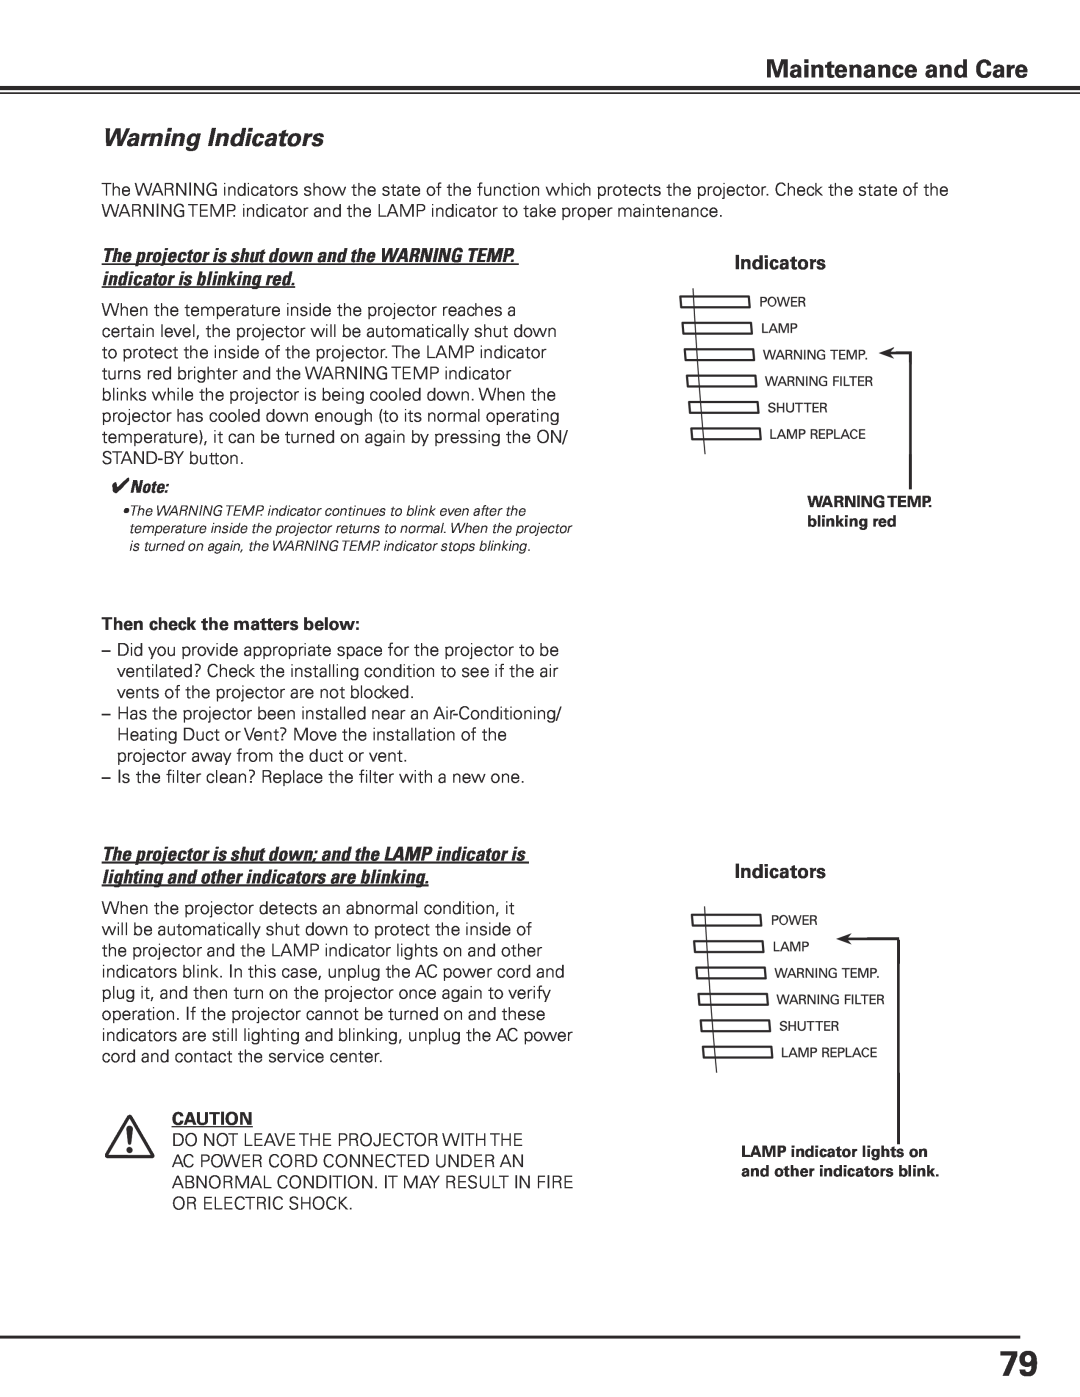 Sanyo HF15000L owner manual Warning Indicators, Maintenance and Care, Then check the matters below 